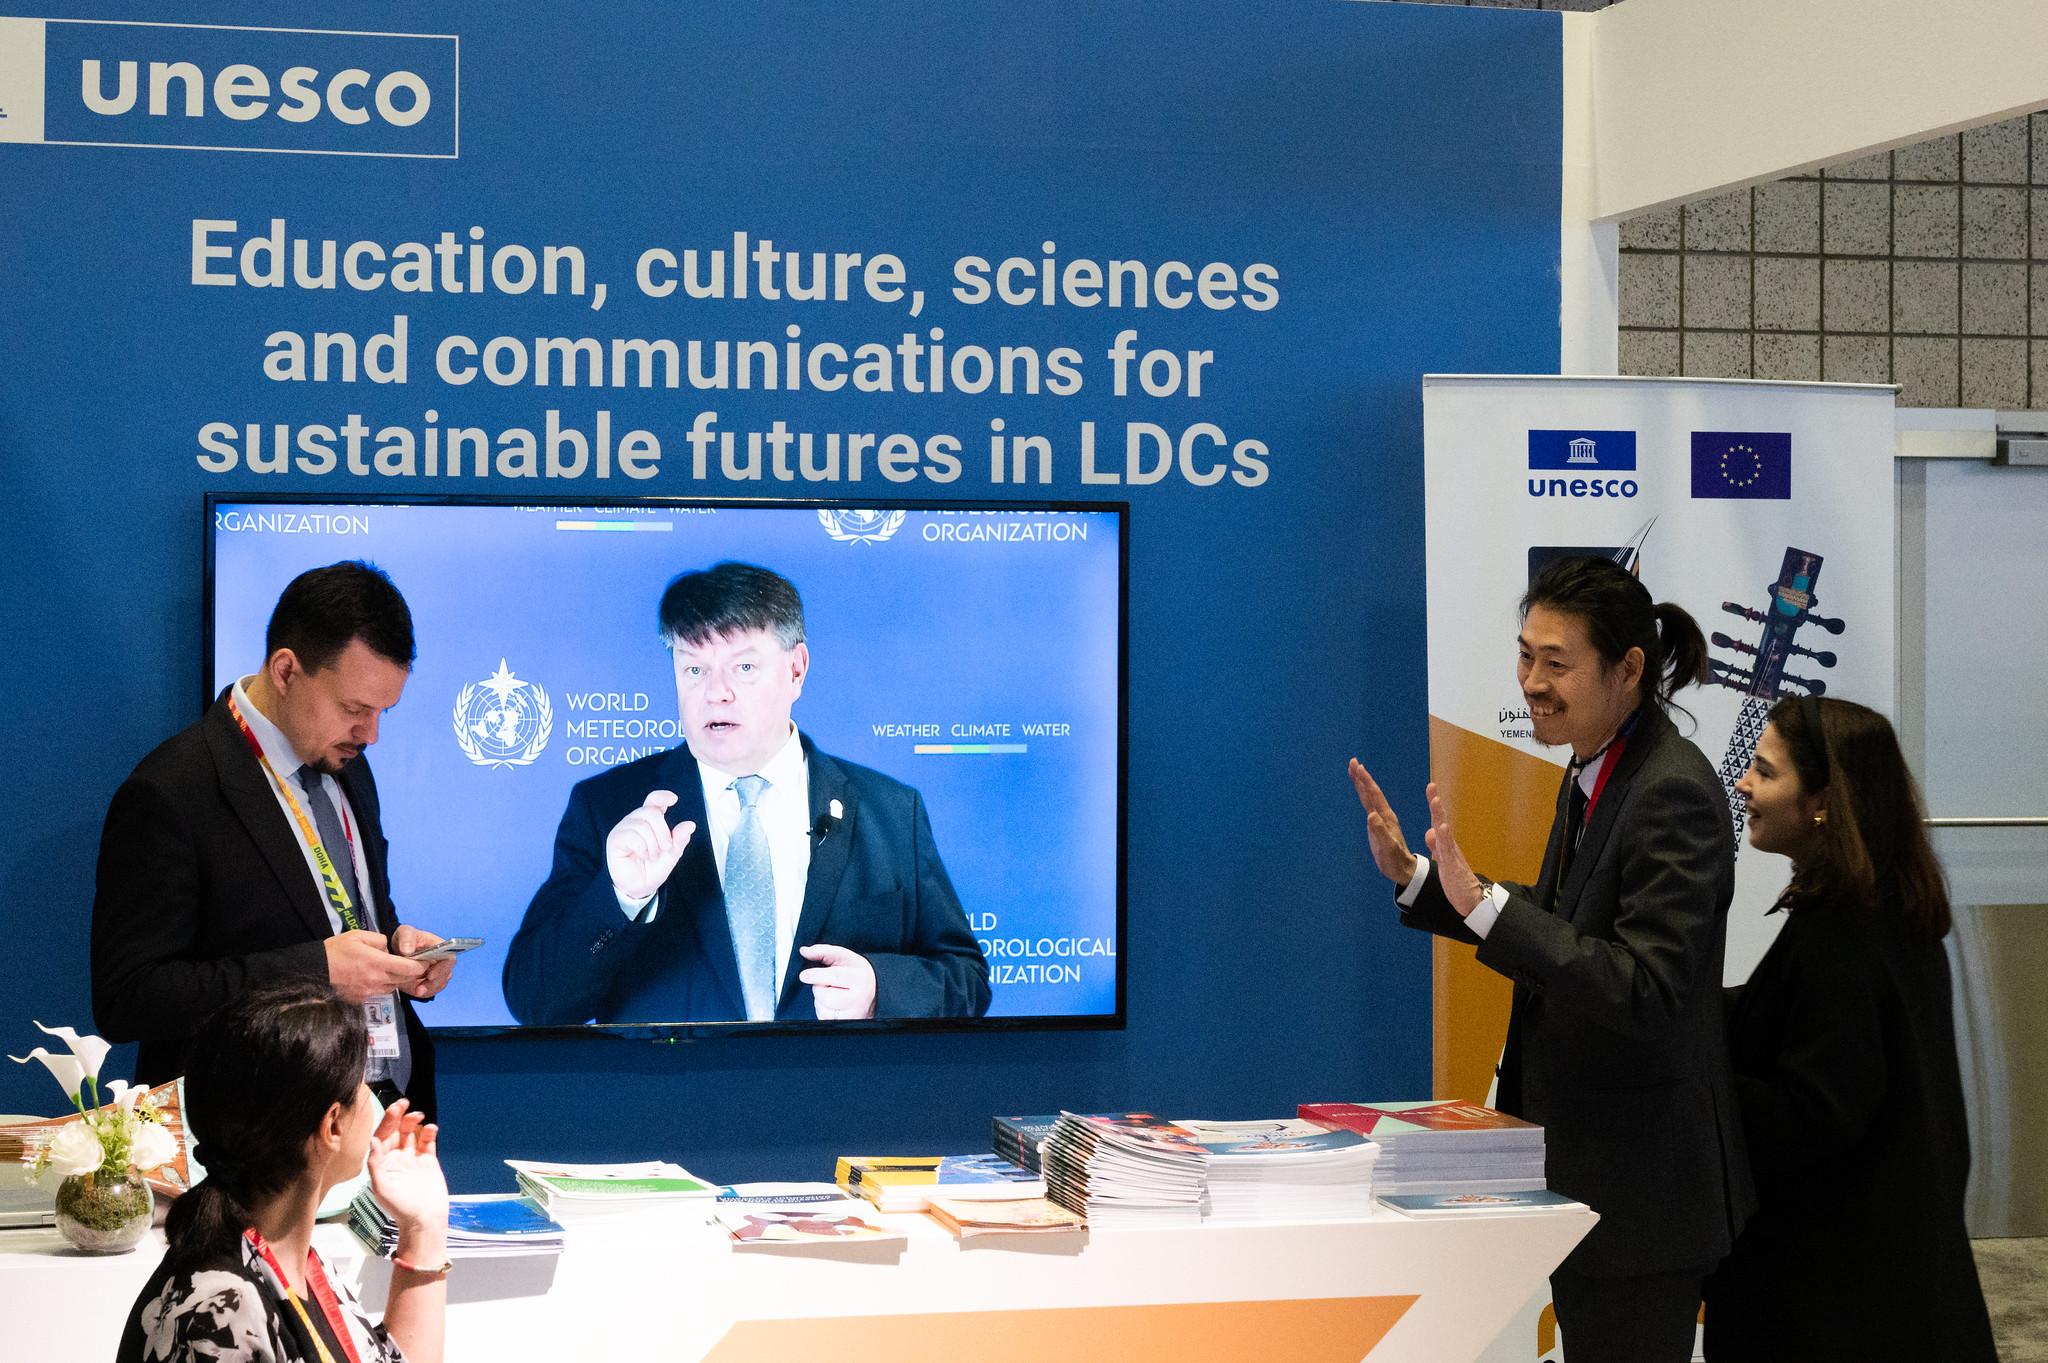 The UNESCO booth at LDC5 (photo: G. Ortolani/TWAS)